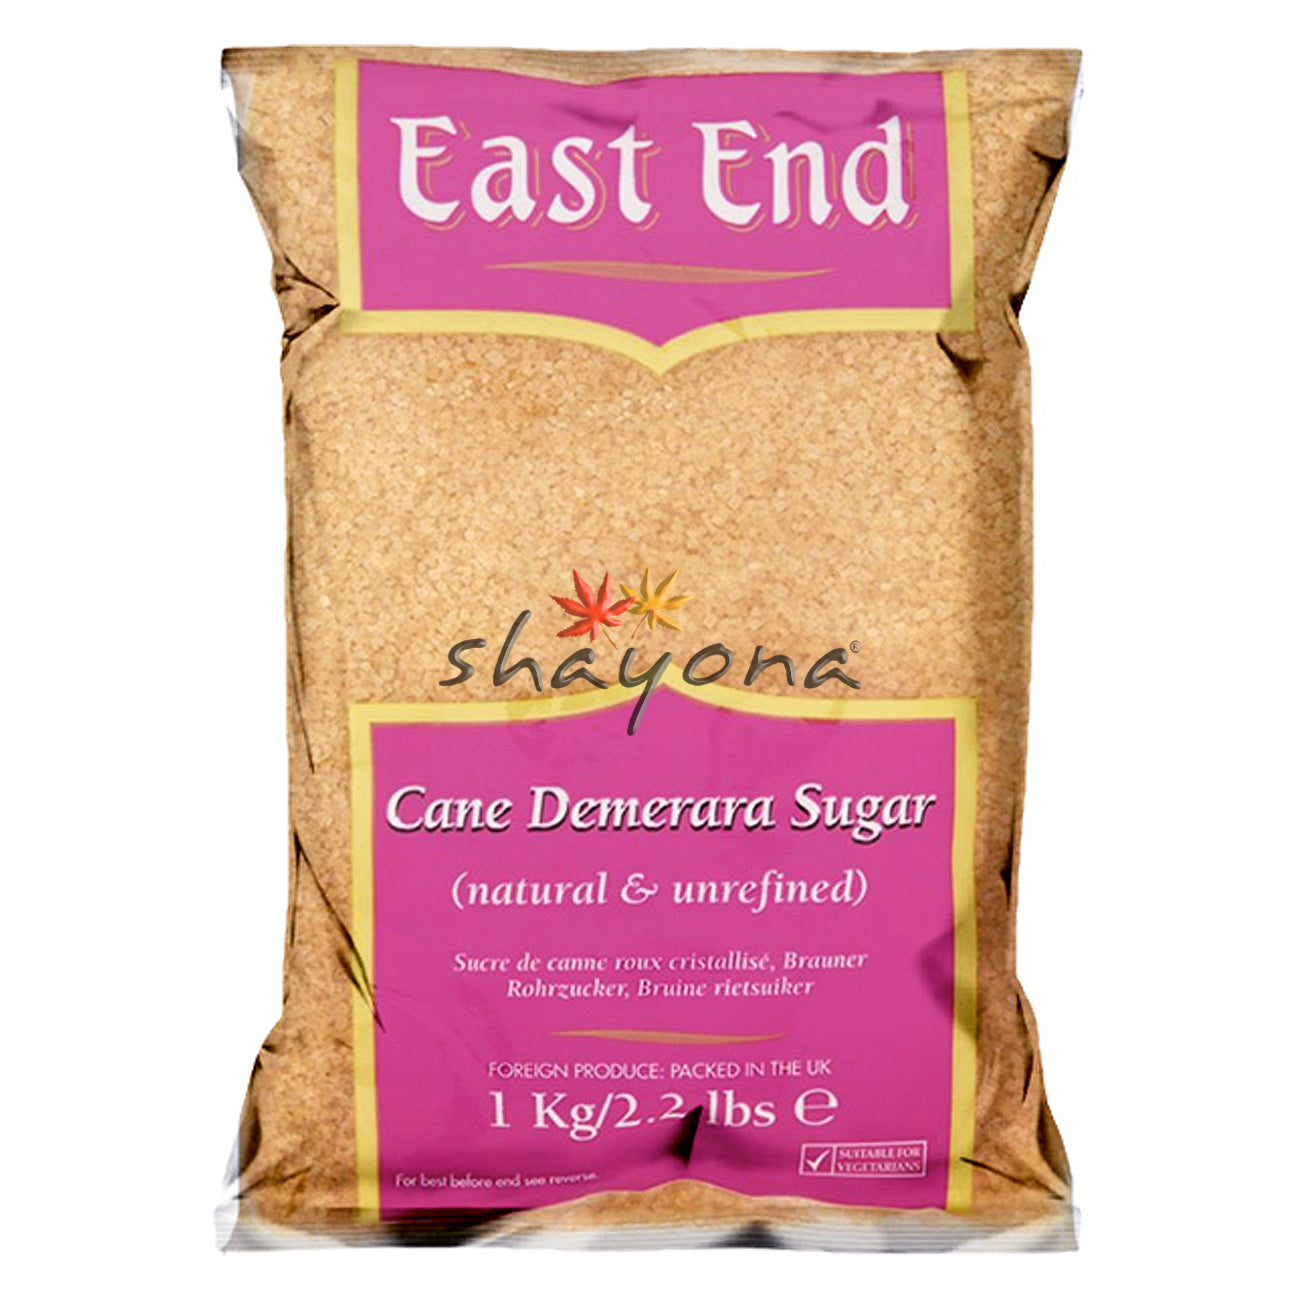 East End Cane Demerara Sugar